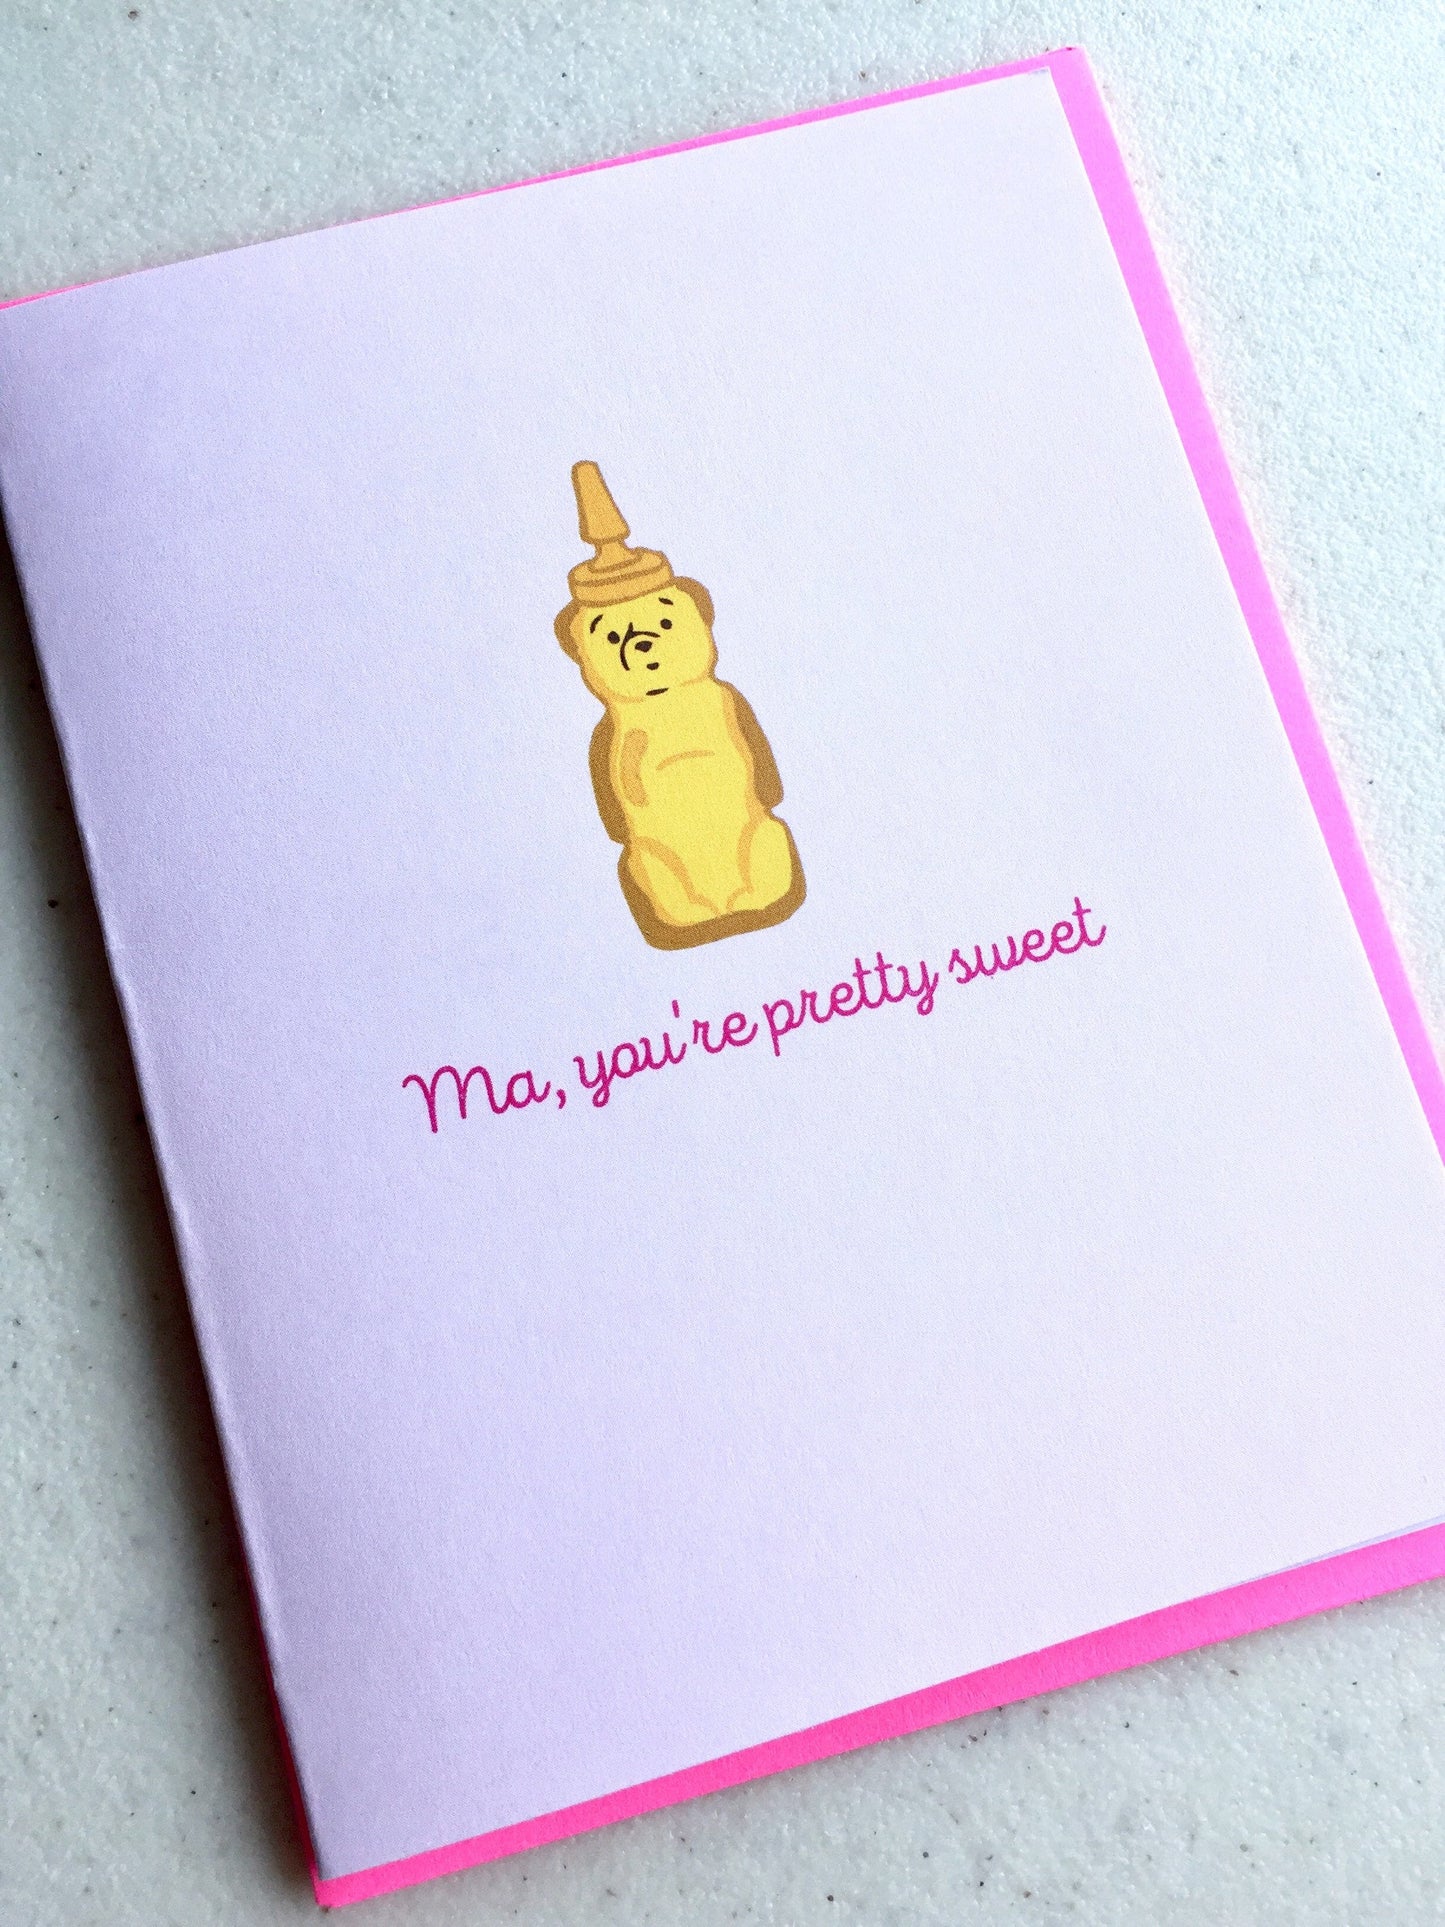 Honey Bear Mother's Day Card - Honey Pot, Sweet Card, Honey Pun Gift, Honey Jar, Mothers Day Card, Card for Mom, Mom Birthday Card